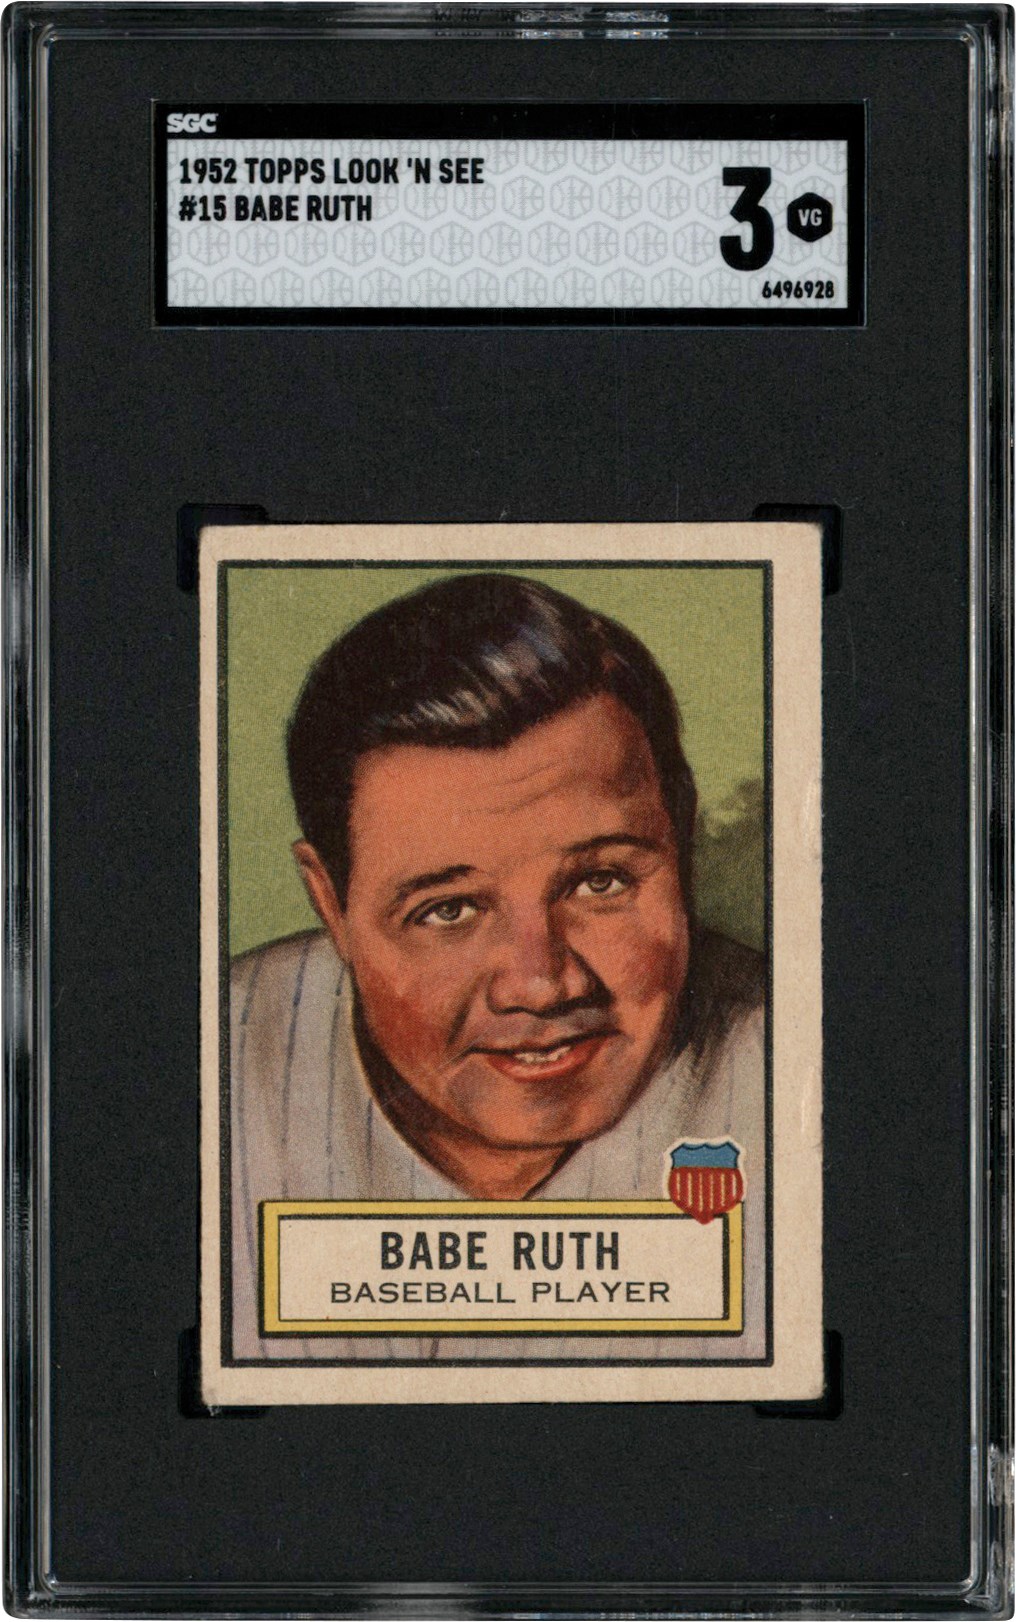 1952 Topps Look 'n See #15 Babe Ruth SGC VG 3